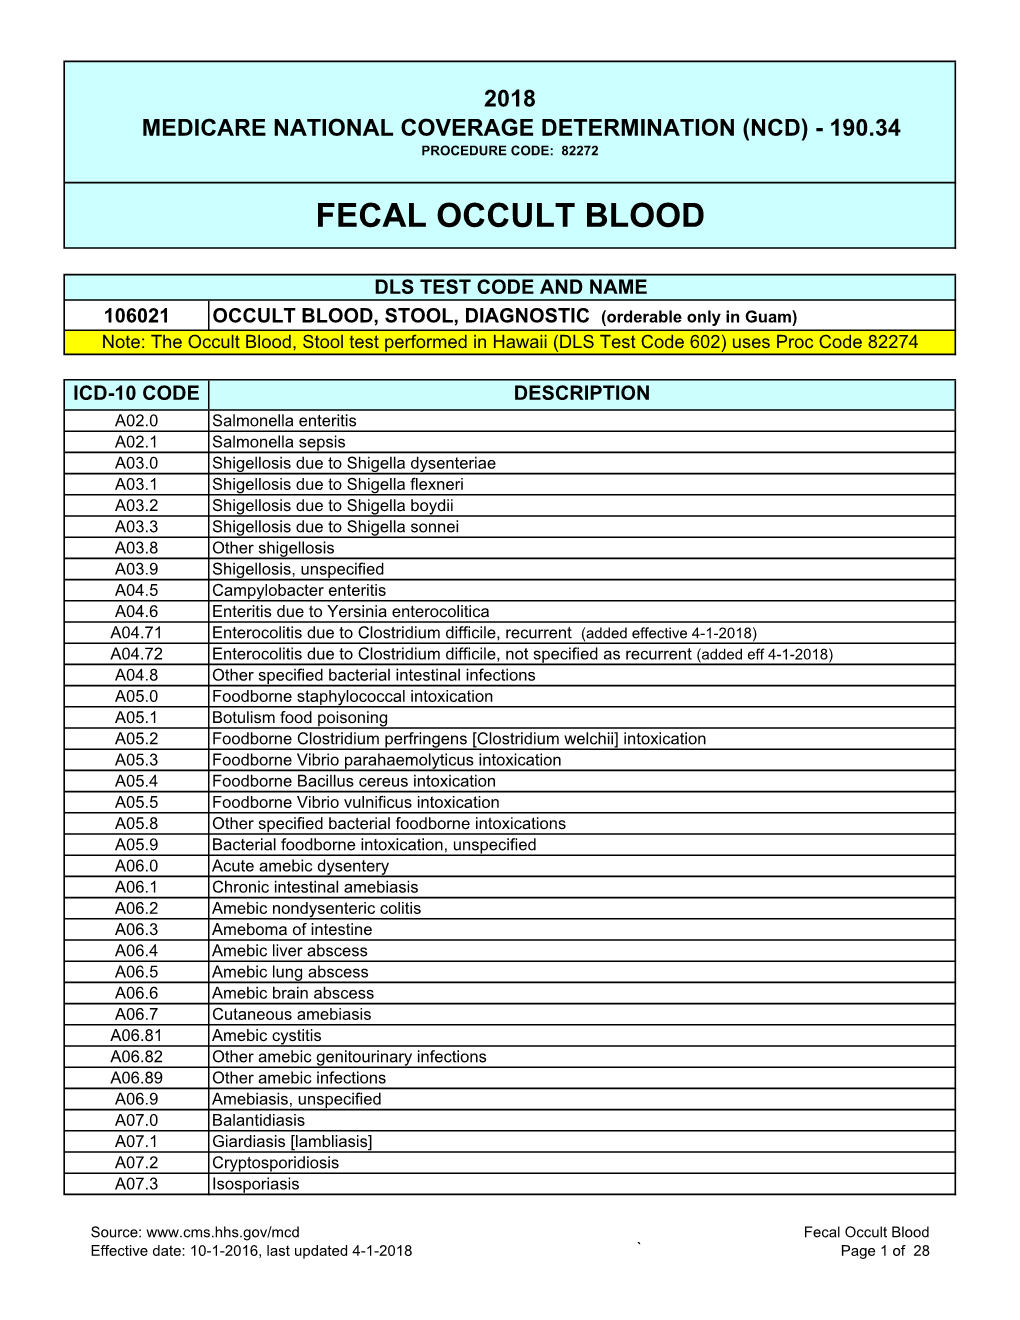 Fecal Occult Blood